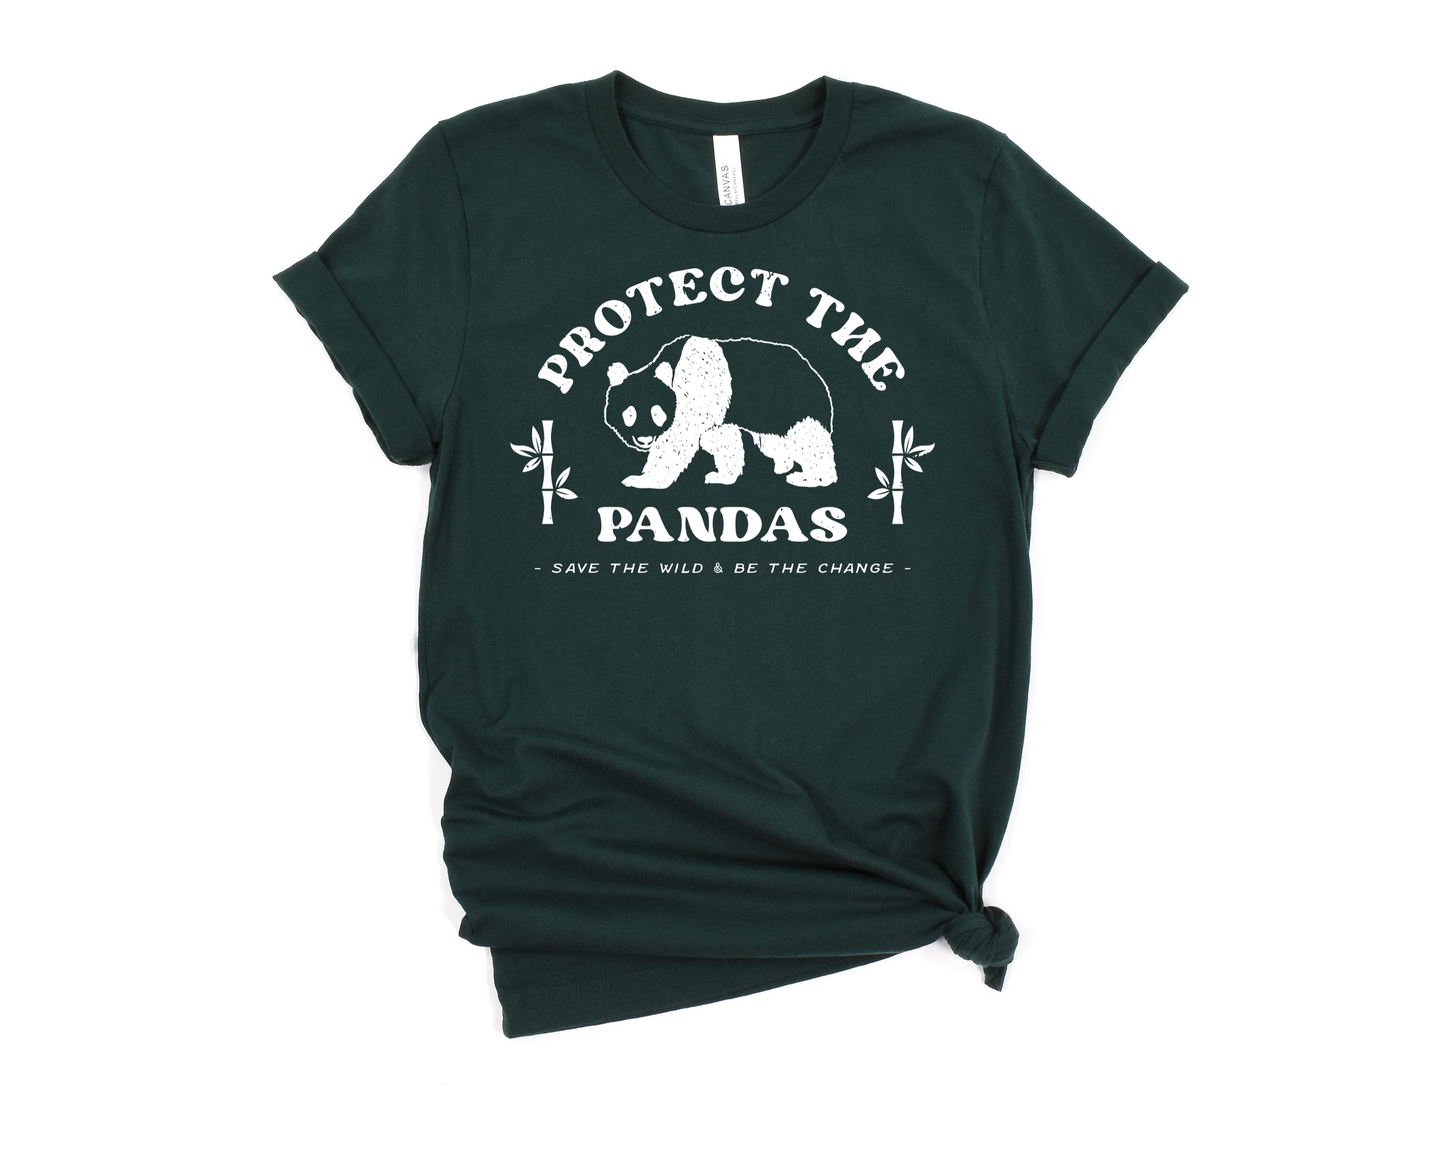 Protect The Pandas T-Shirt